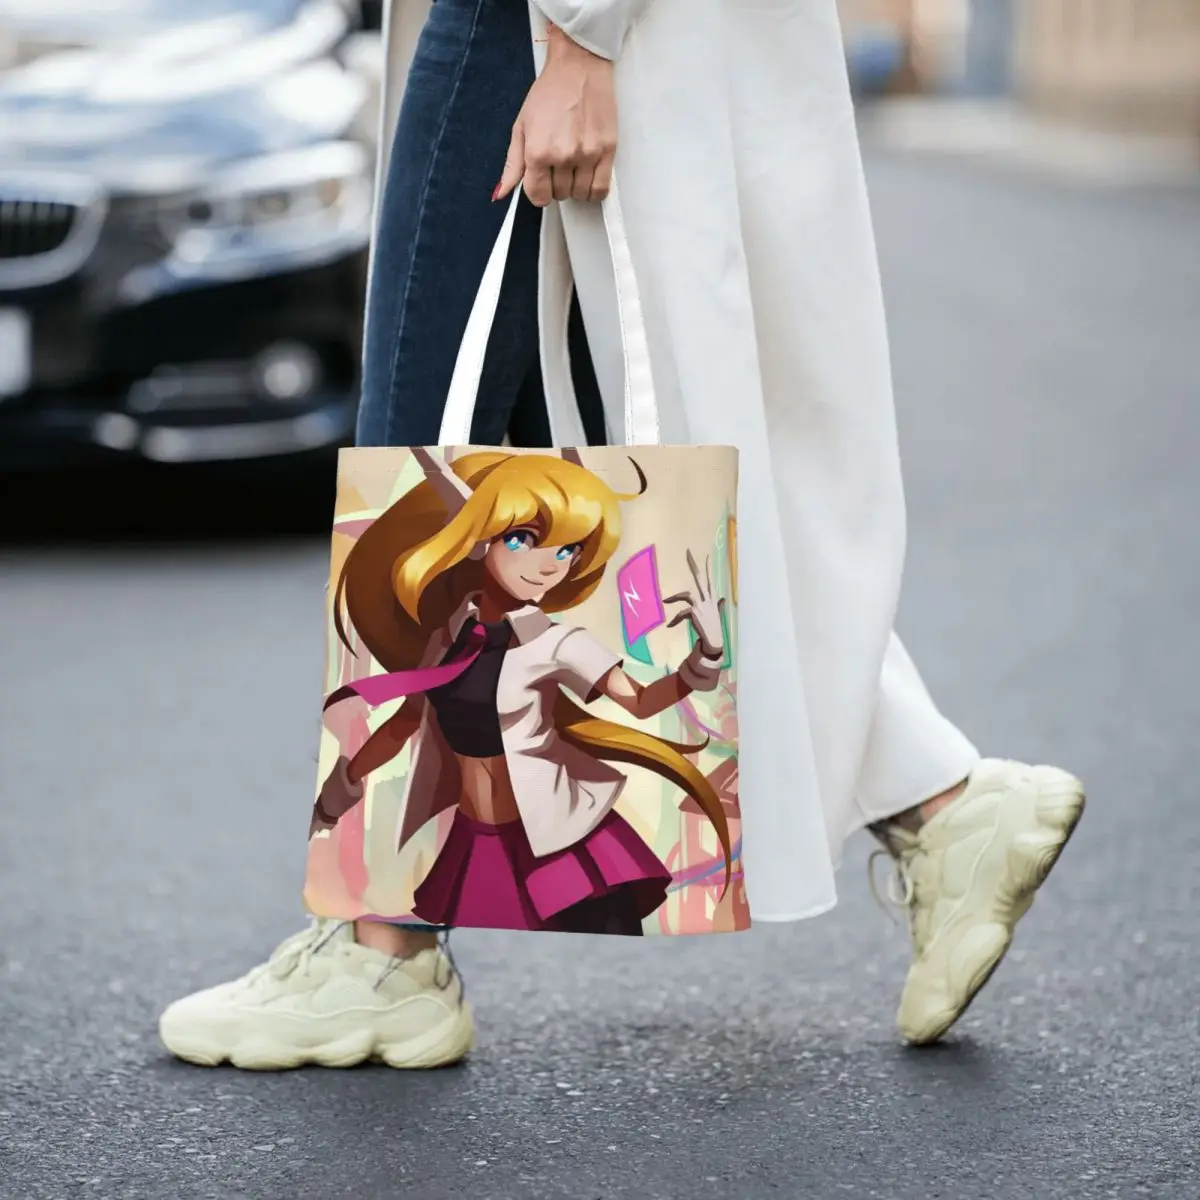 One Step From Eden Totes Canvas Handbag Women Canvas Shopping Bag